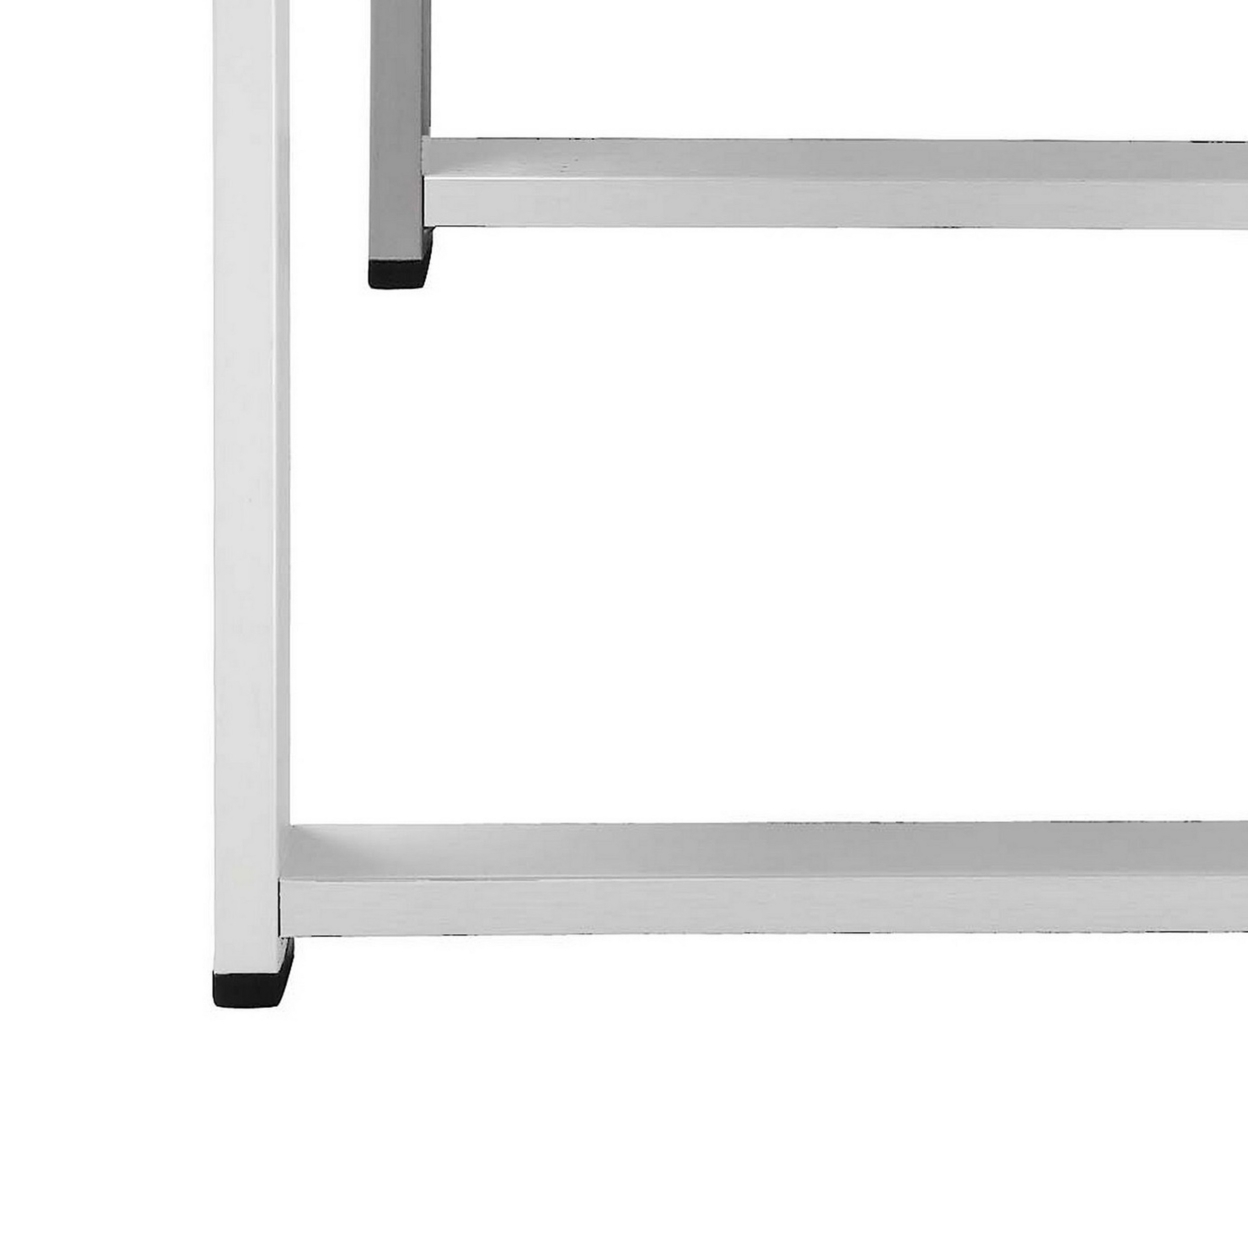 Kili 35 Inch Coffee Table, Gray Polyresin Top, Crisp White Aluminum Frame- Saltoro Sherpi